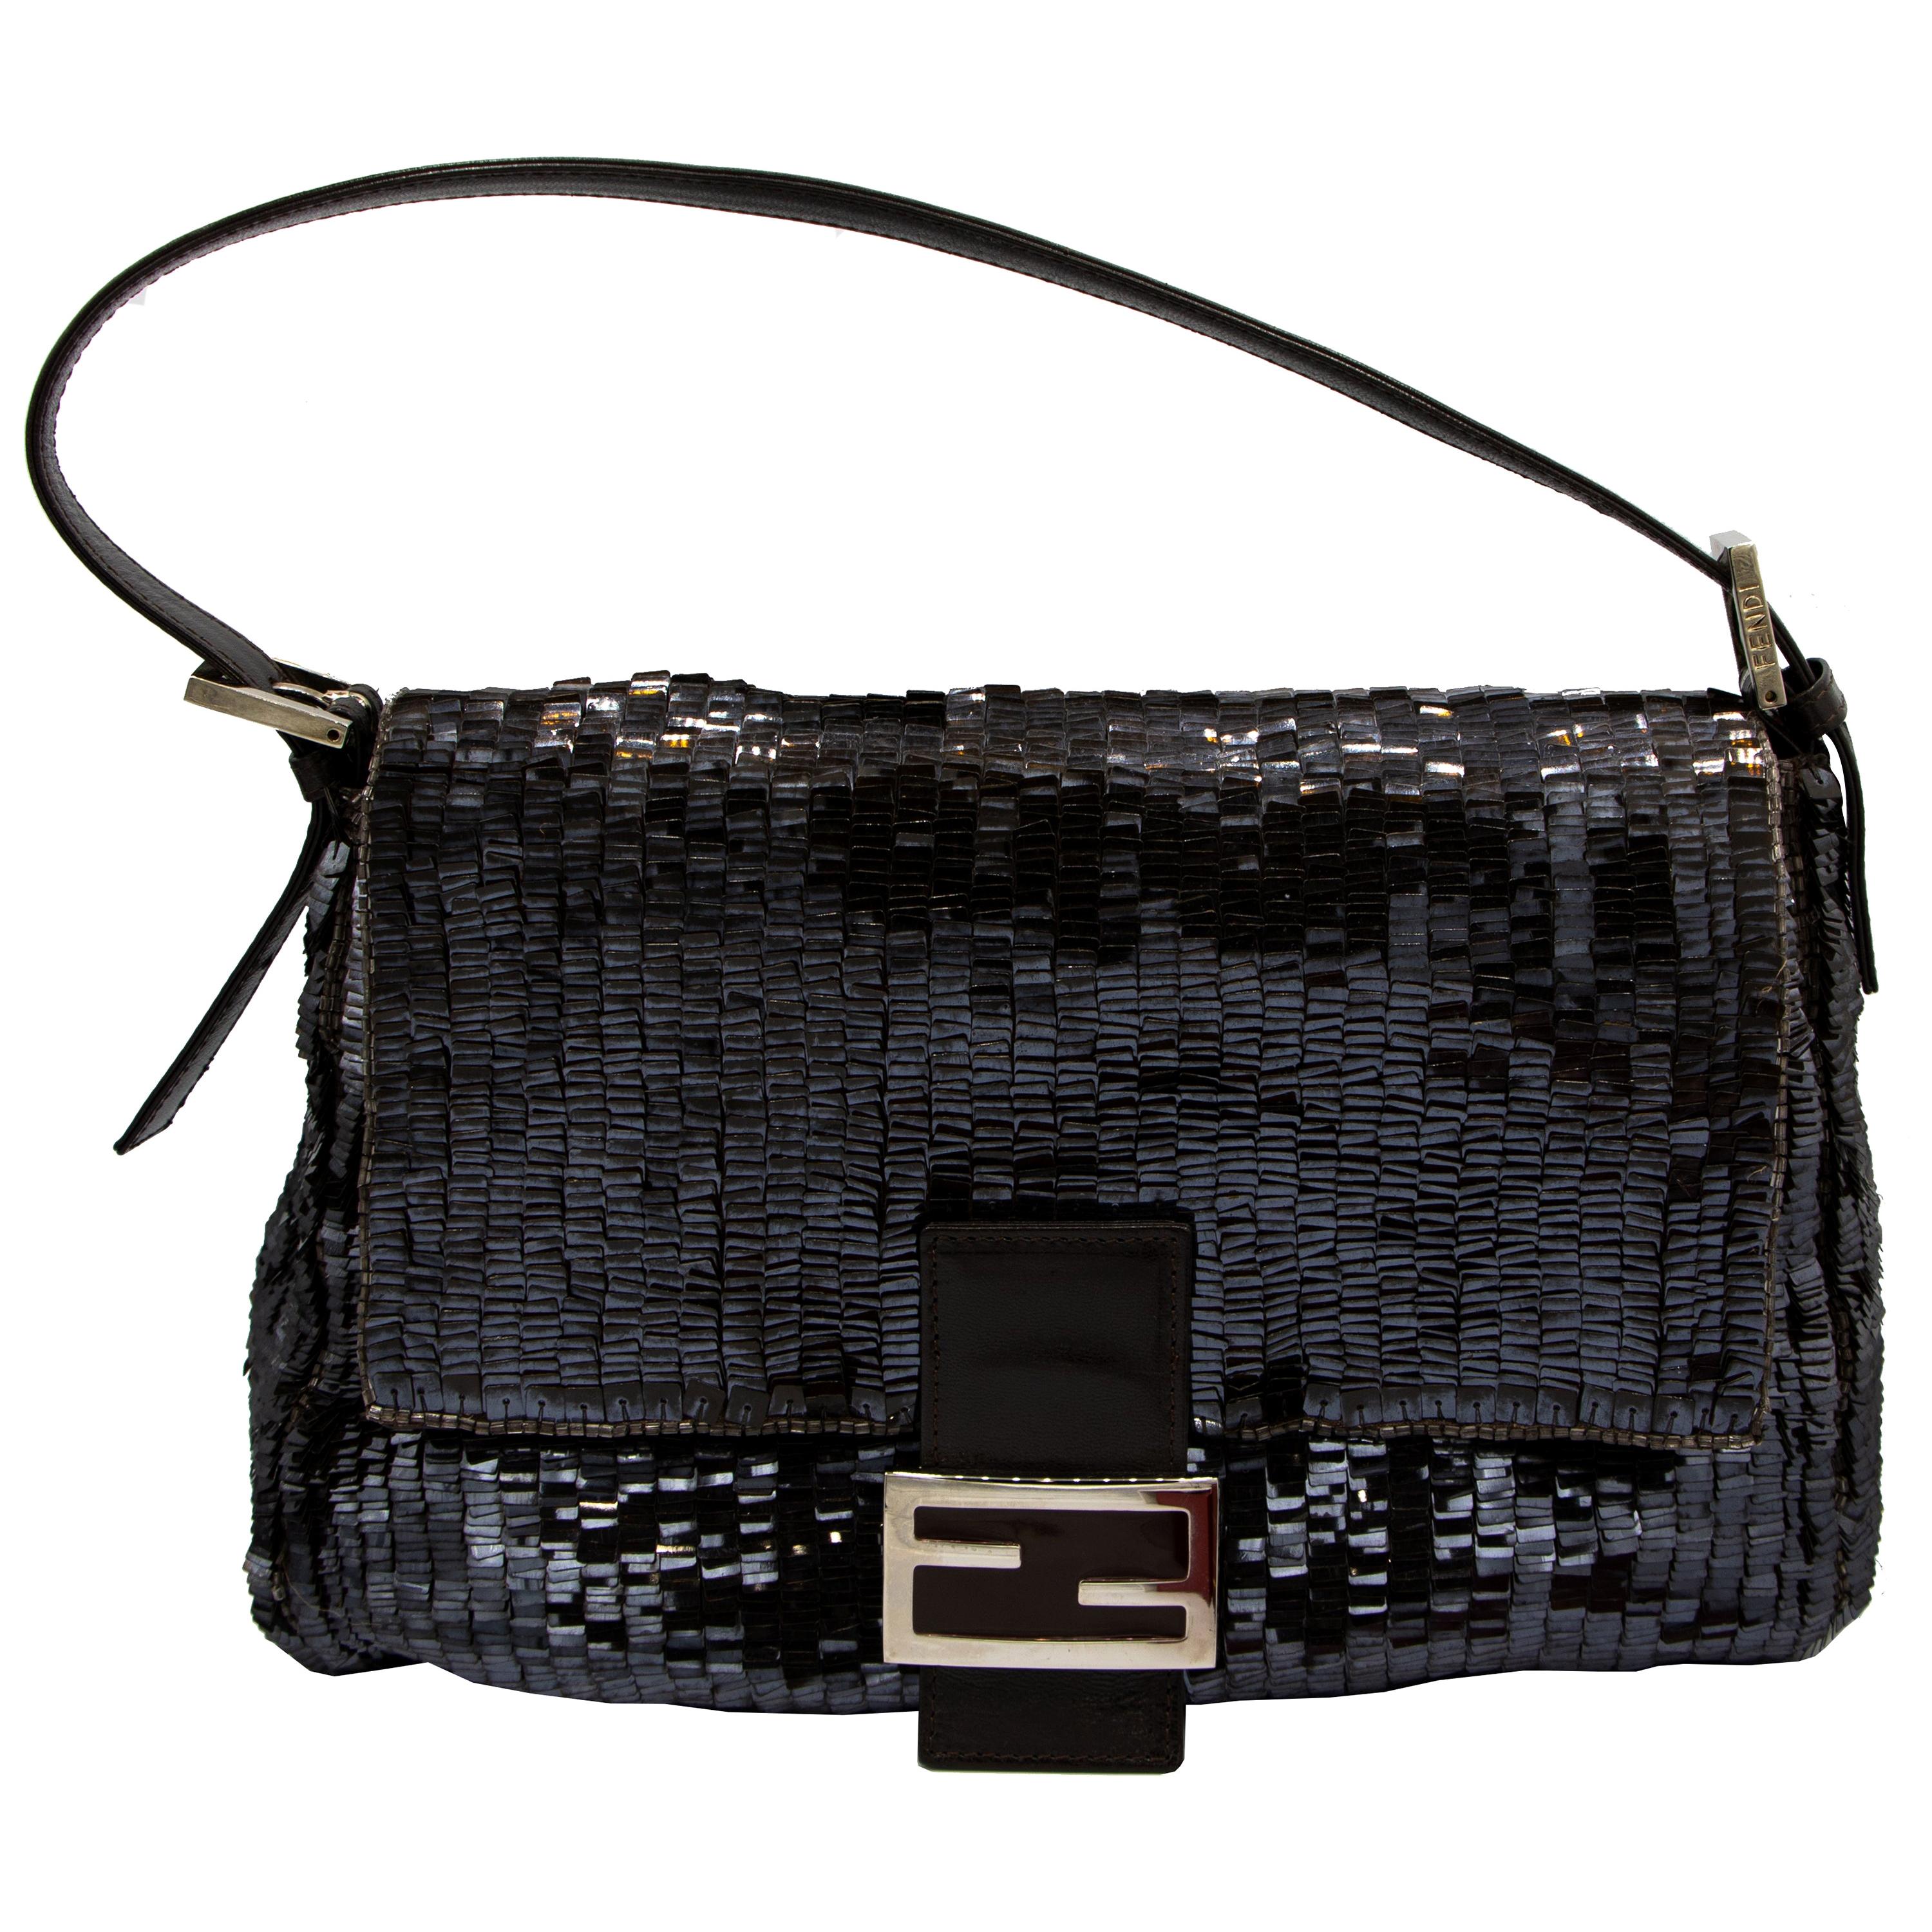 Dark Chocolate Brown Fendi Sequence Handbag with Strap